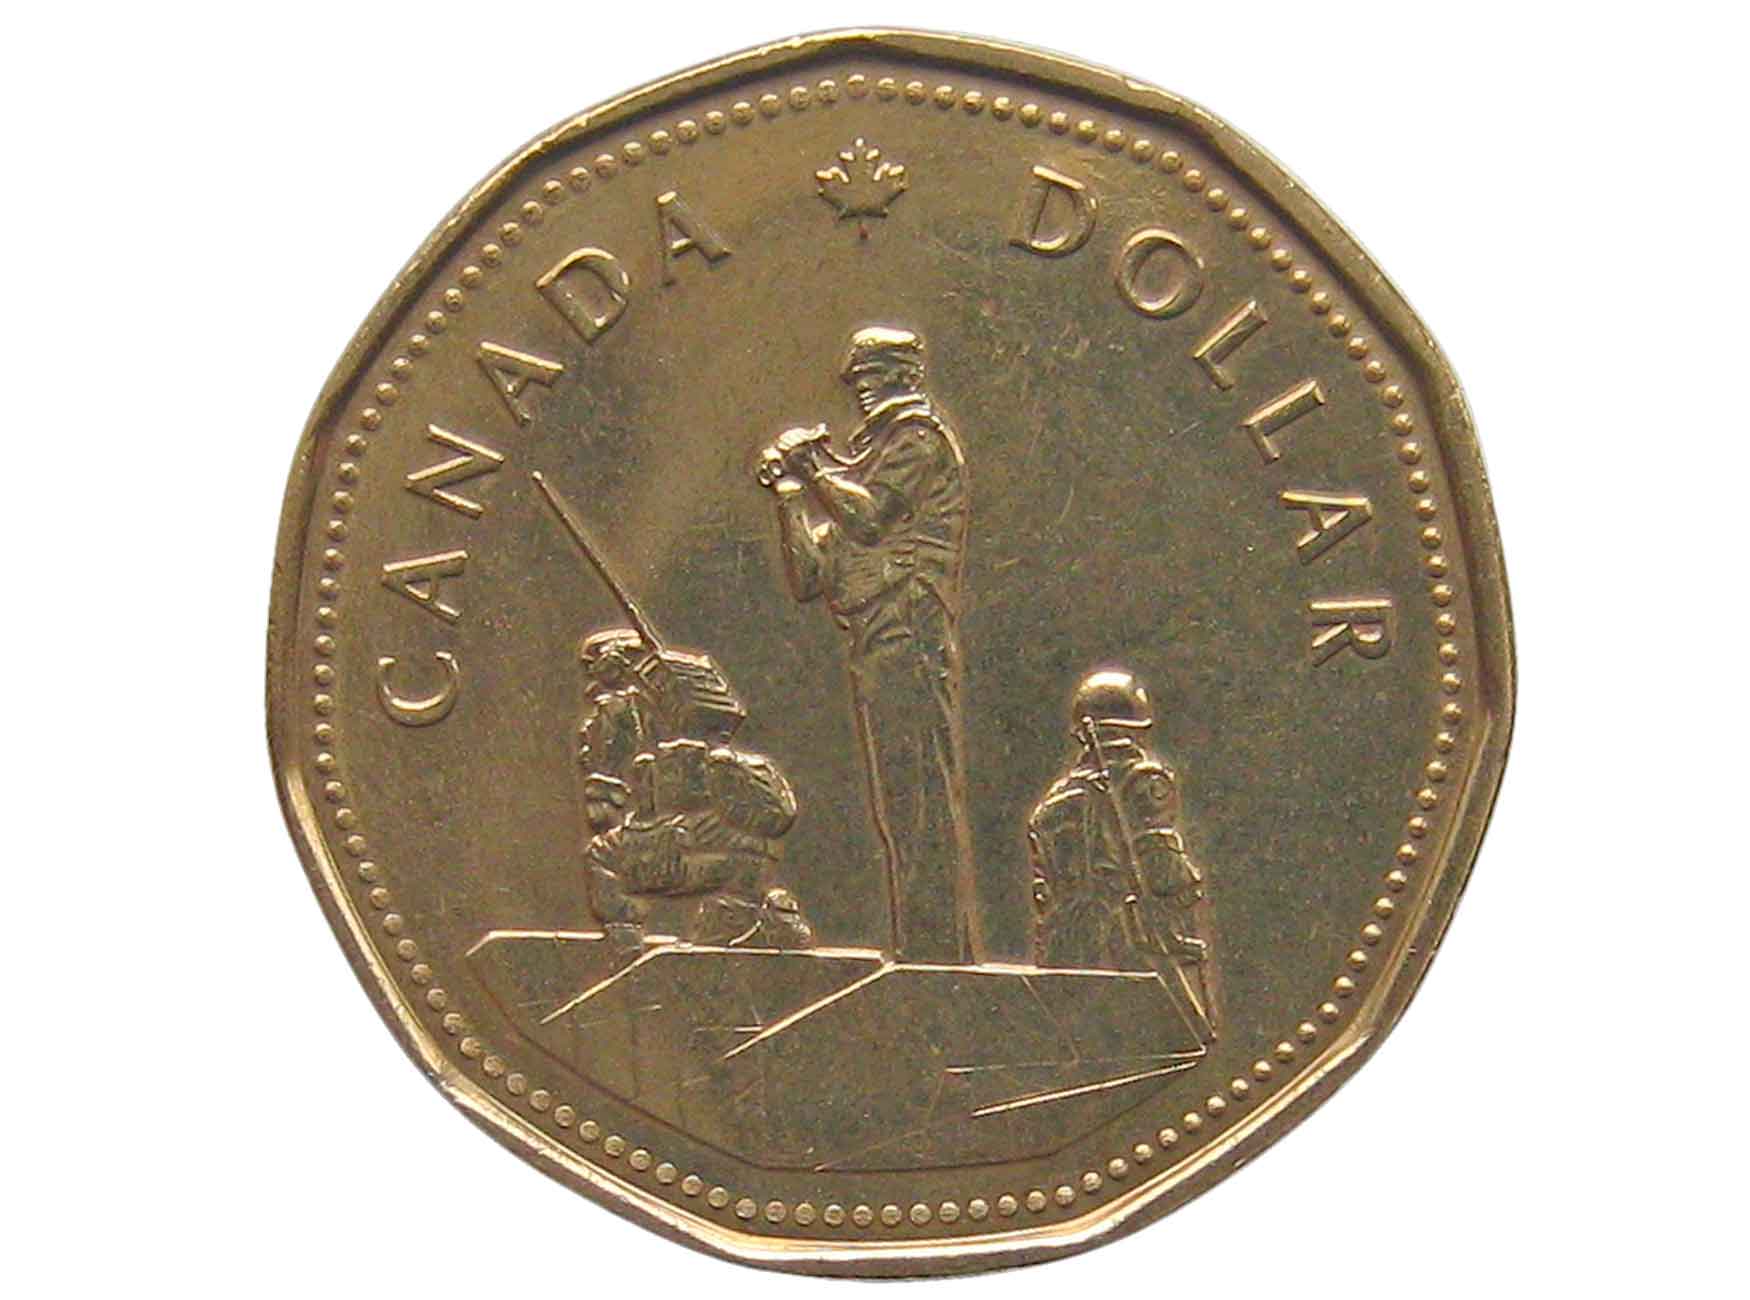 1 доллар 1995. 1 Канадский доллар 1995. Канада 1 доллар 1918. Канада 1 доллар, 2011 100 лет национальным паркам. Канада 1 доллар бронза 1995 Proof миротворческие силы ООН.